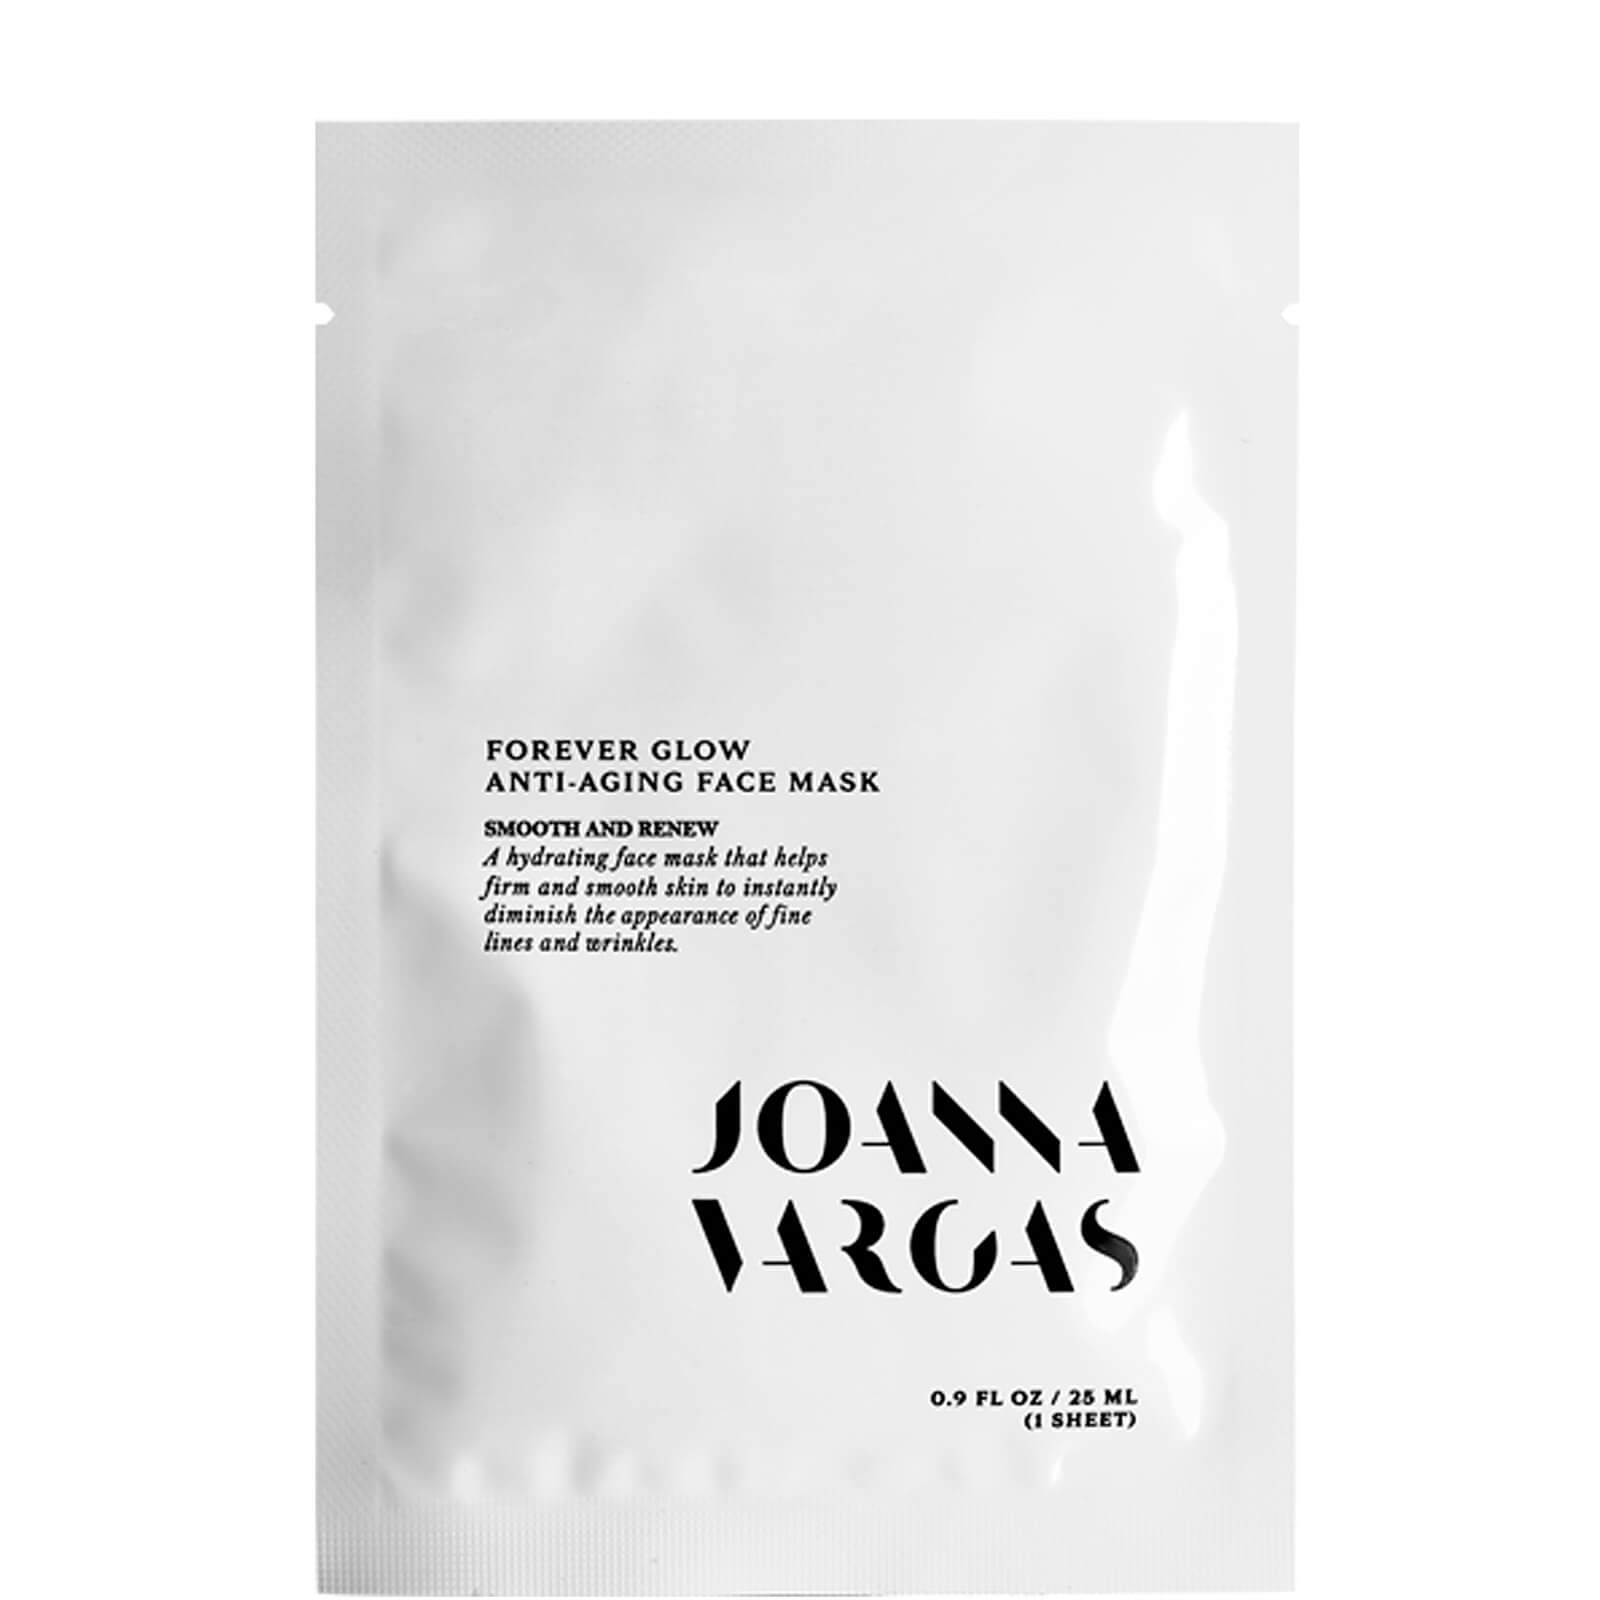 Joanna Vargas Forever Glow Anti-aging Face Mask (1 Sheet) In White